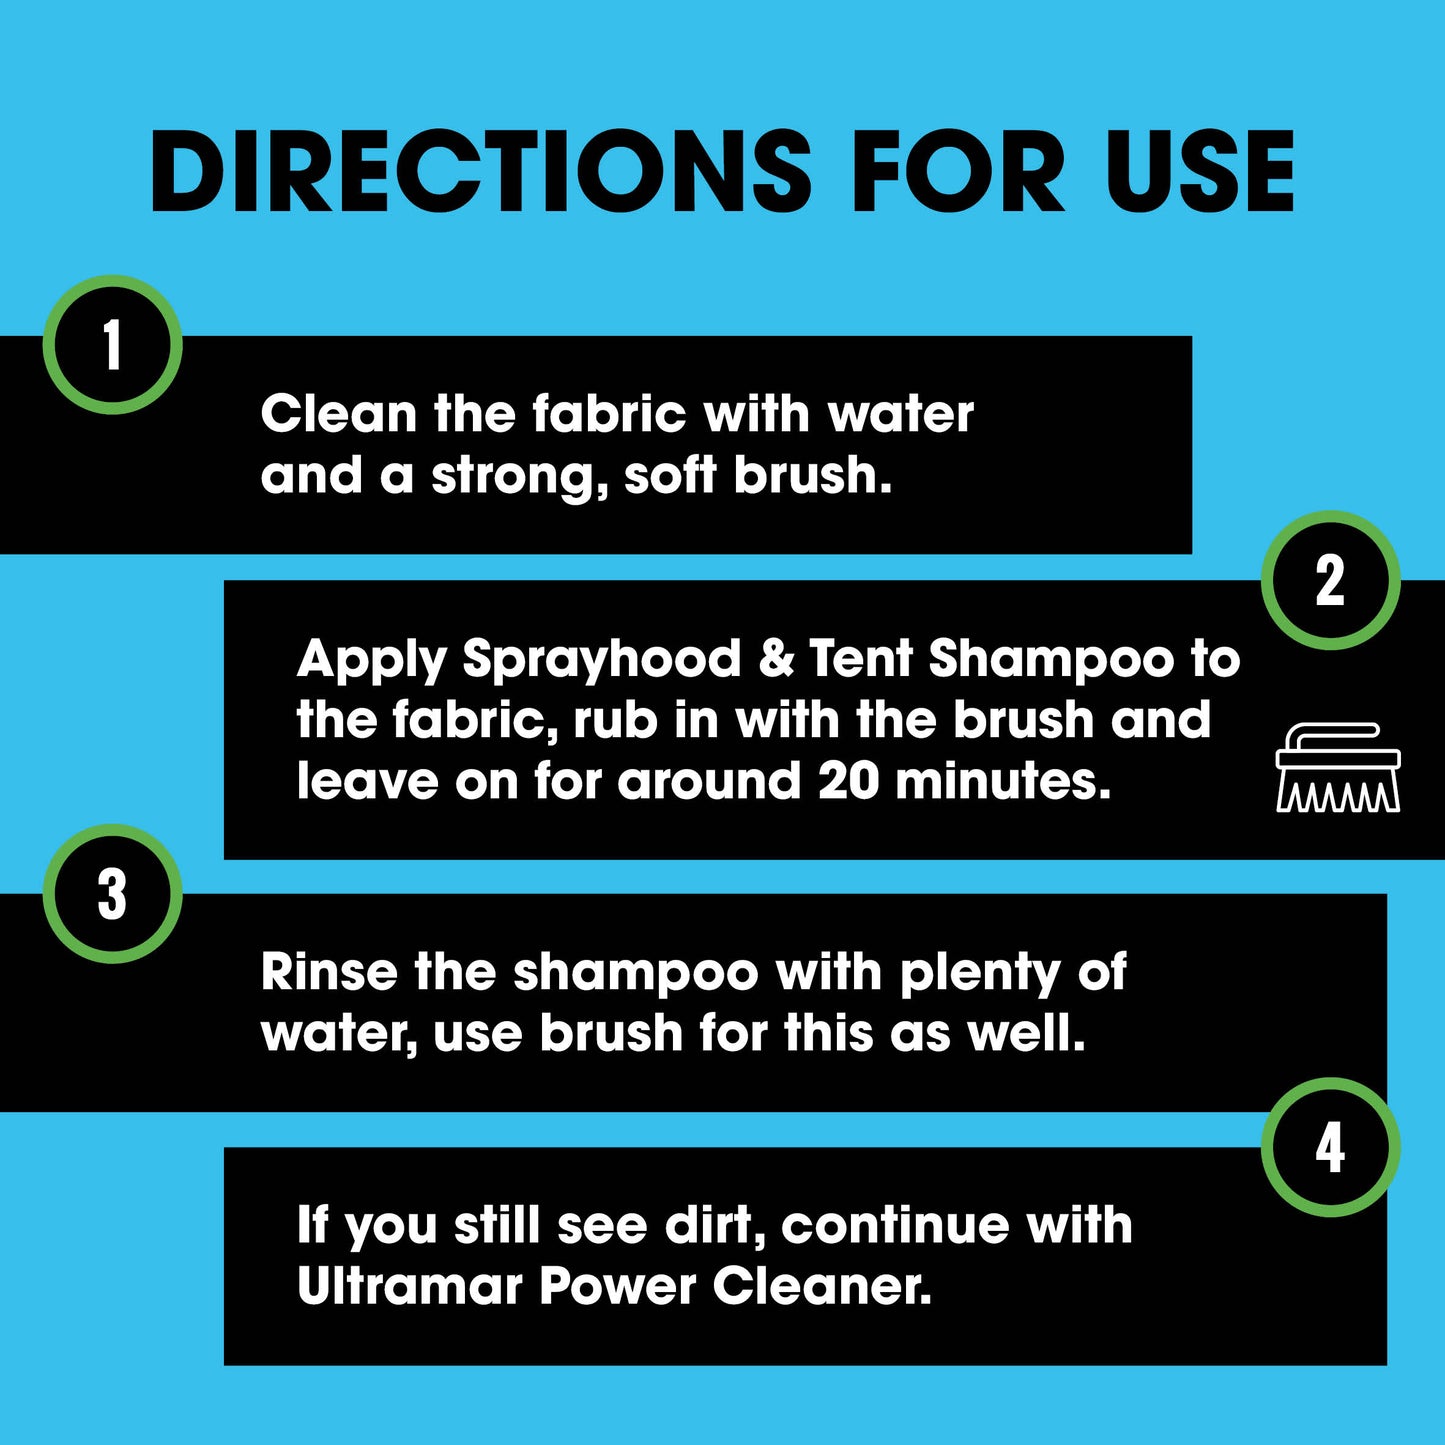 Cloth cleaner: Sprayhood & Tent Shampoo